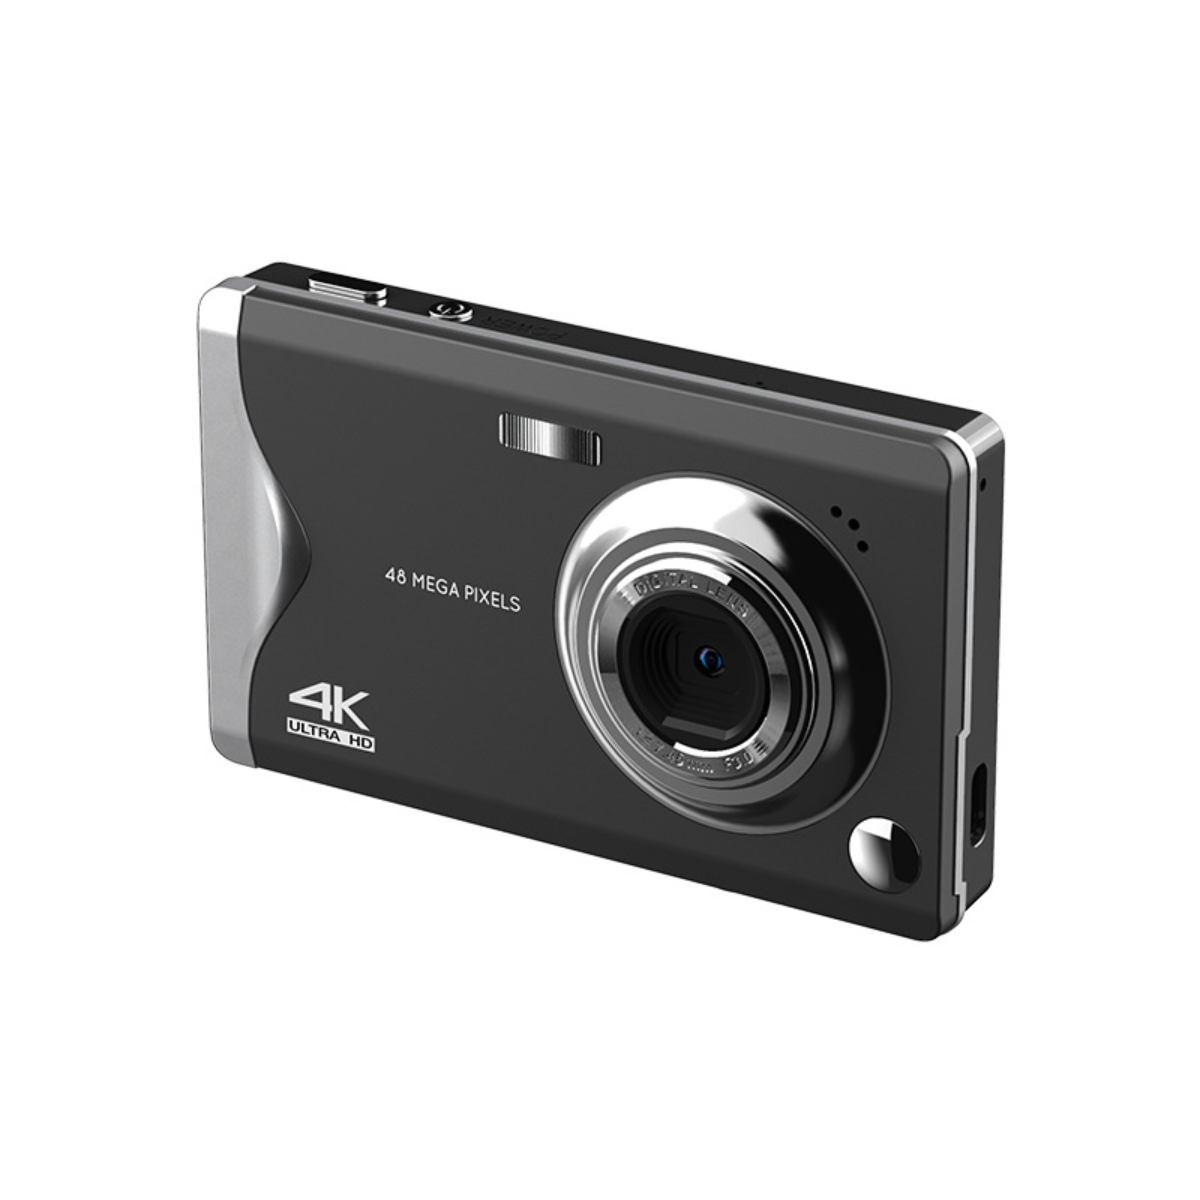 SYNTEK Digitalkamera Schwarz 3-Zoll-Großbildschirm HD High-Definition-Kamera Autofokus Flüssigkristallbildschirm- Schwarz, Leichte Digitalkamera 4K